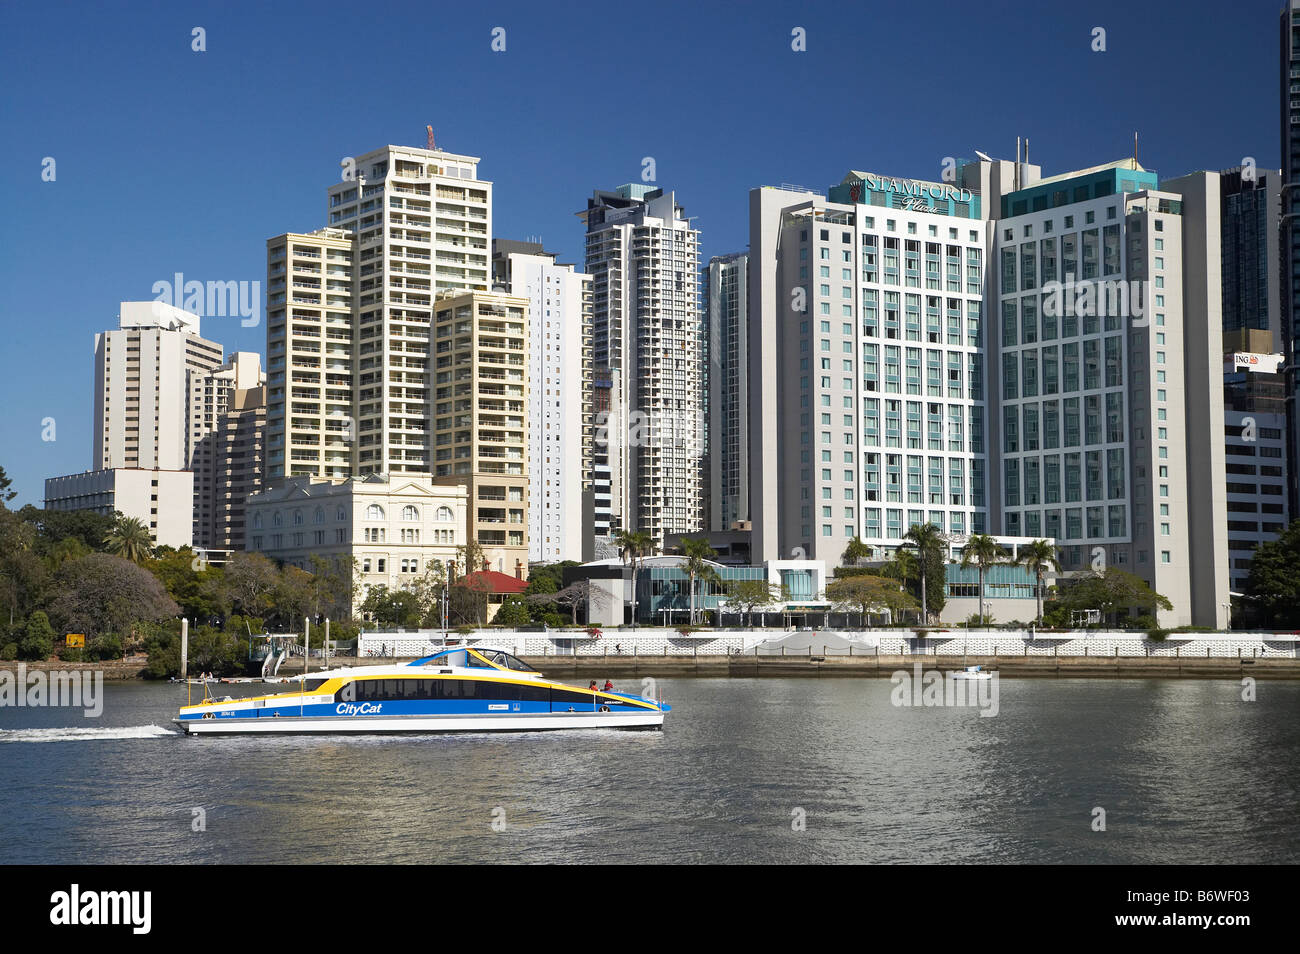 Stamford Plaza Hotel and Skyscrapers and City Cat Passenger Ferry Brisbane River Brisbane Queensland Australia Stock Photo